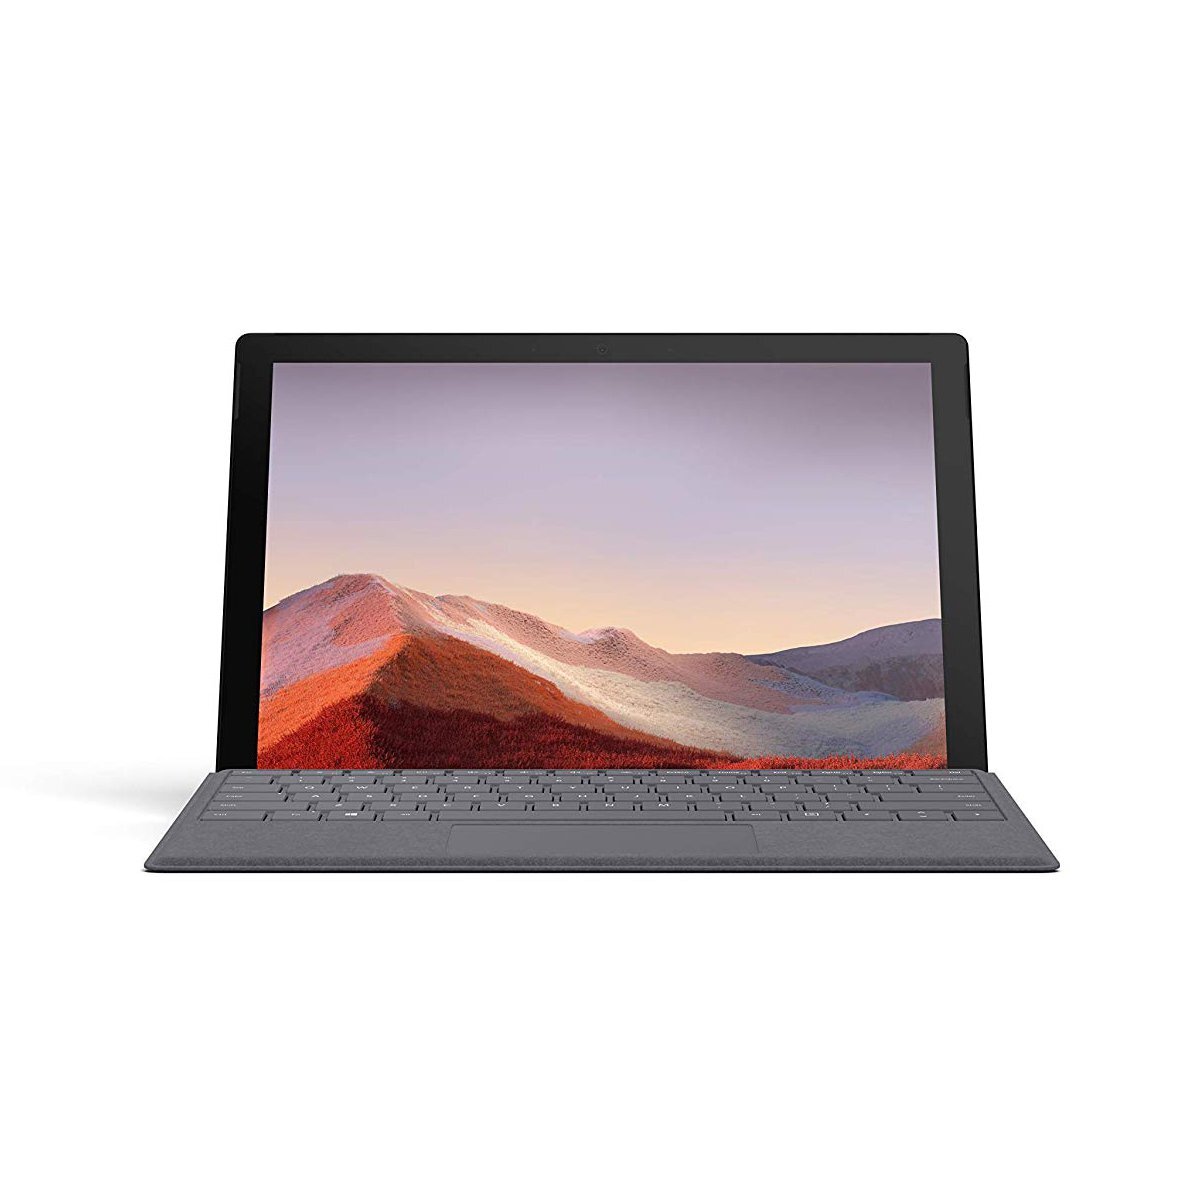 Laptop Microsoft Surface Pro 7 - Intel core i7-1065G7 , 16GB RAM, SSD 256GB, Intel Iris Plus Graphics, 12.3 inch